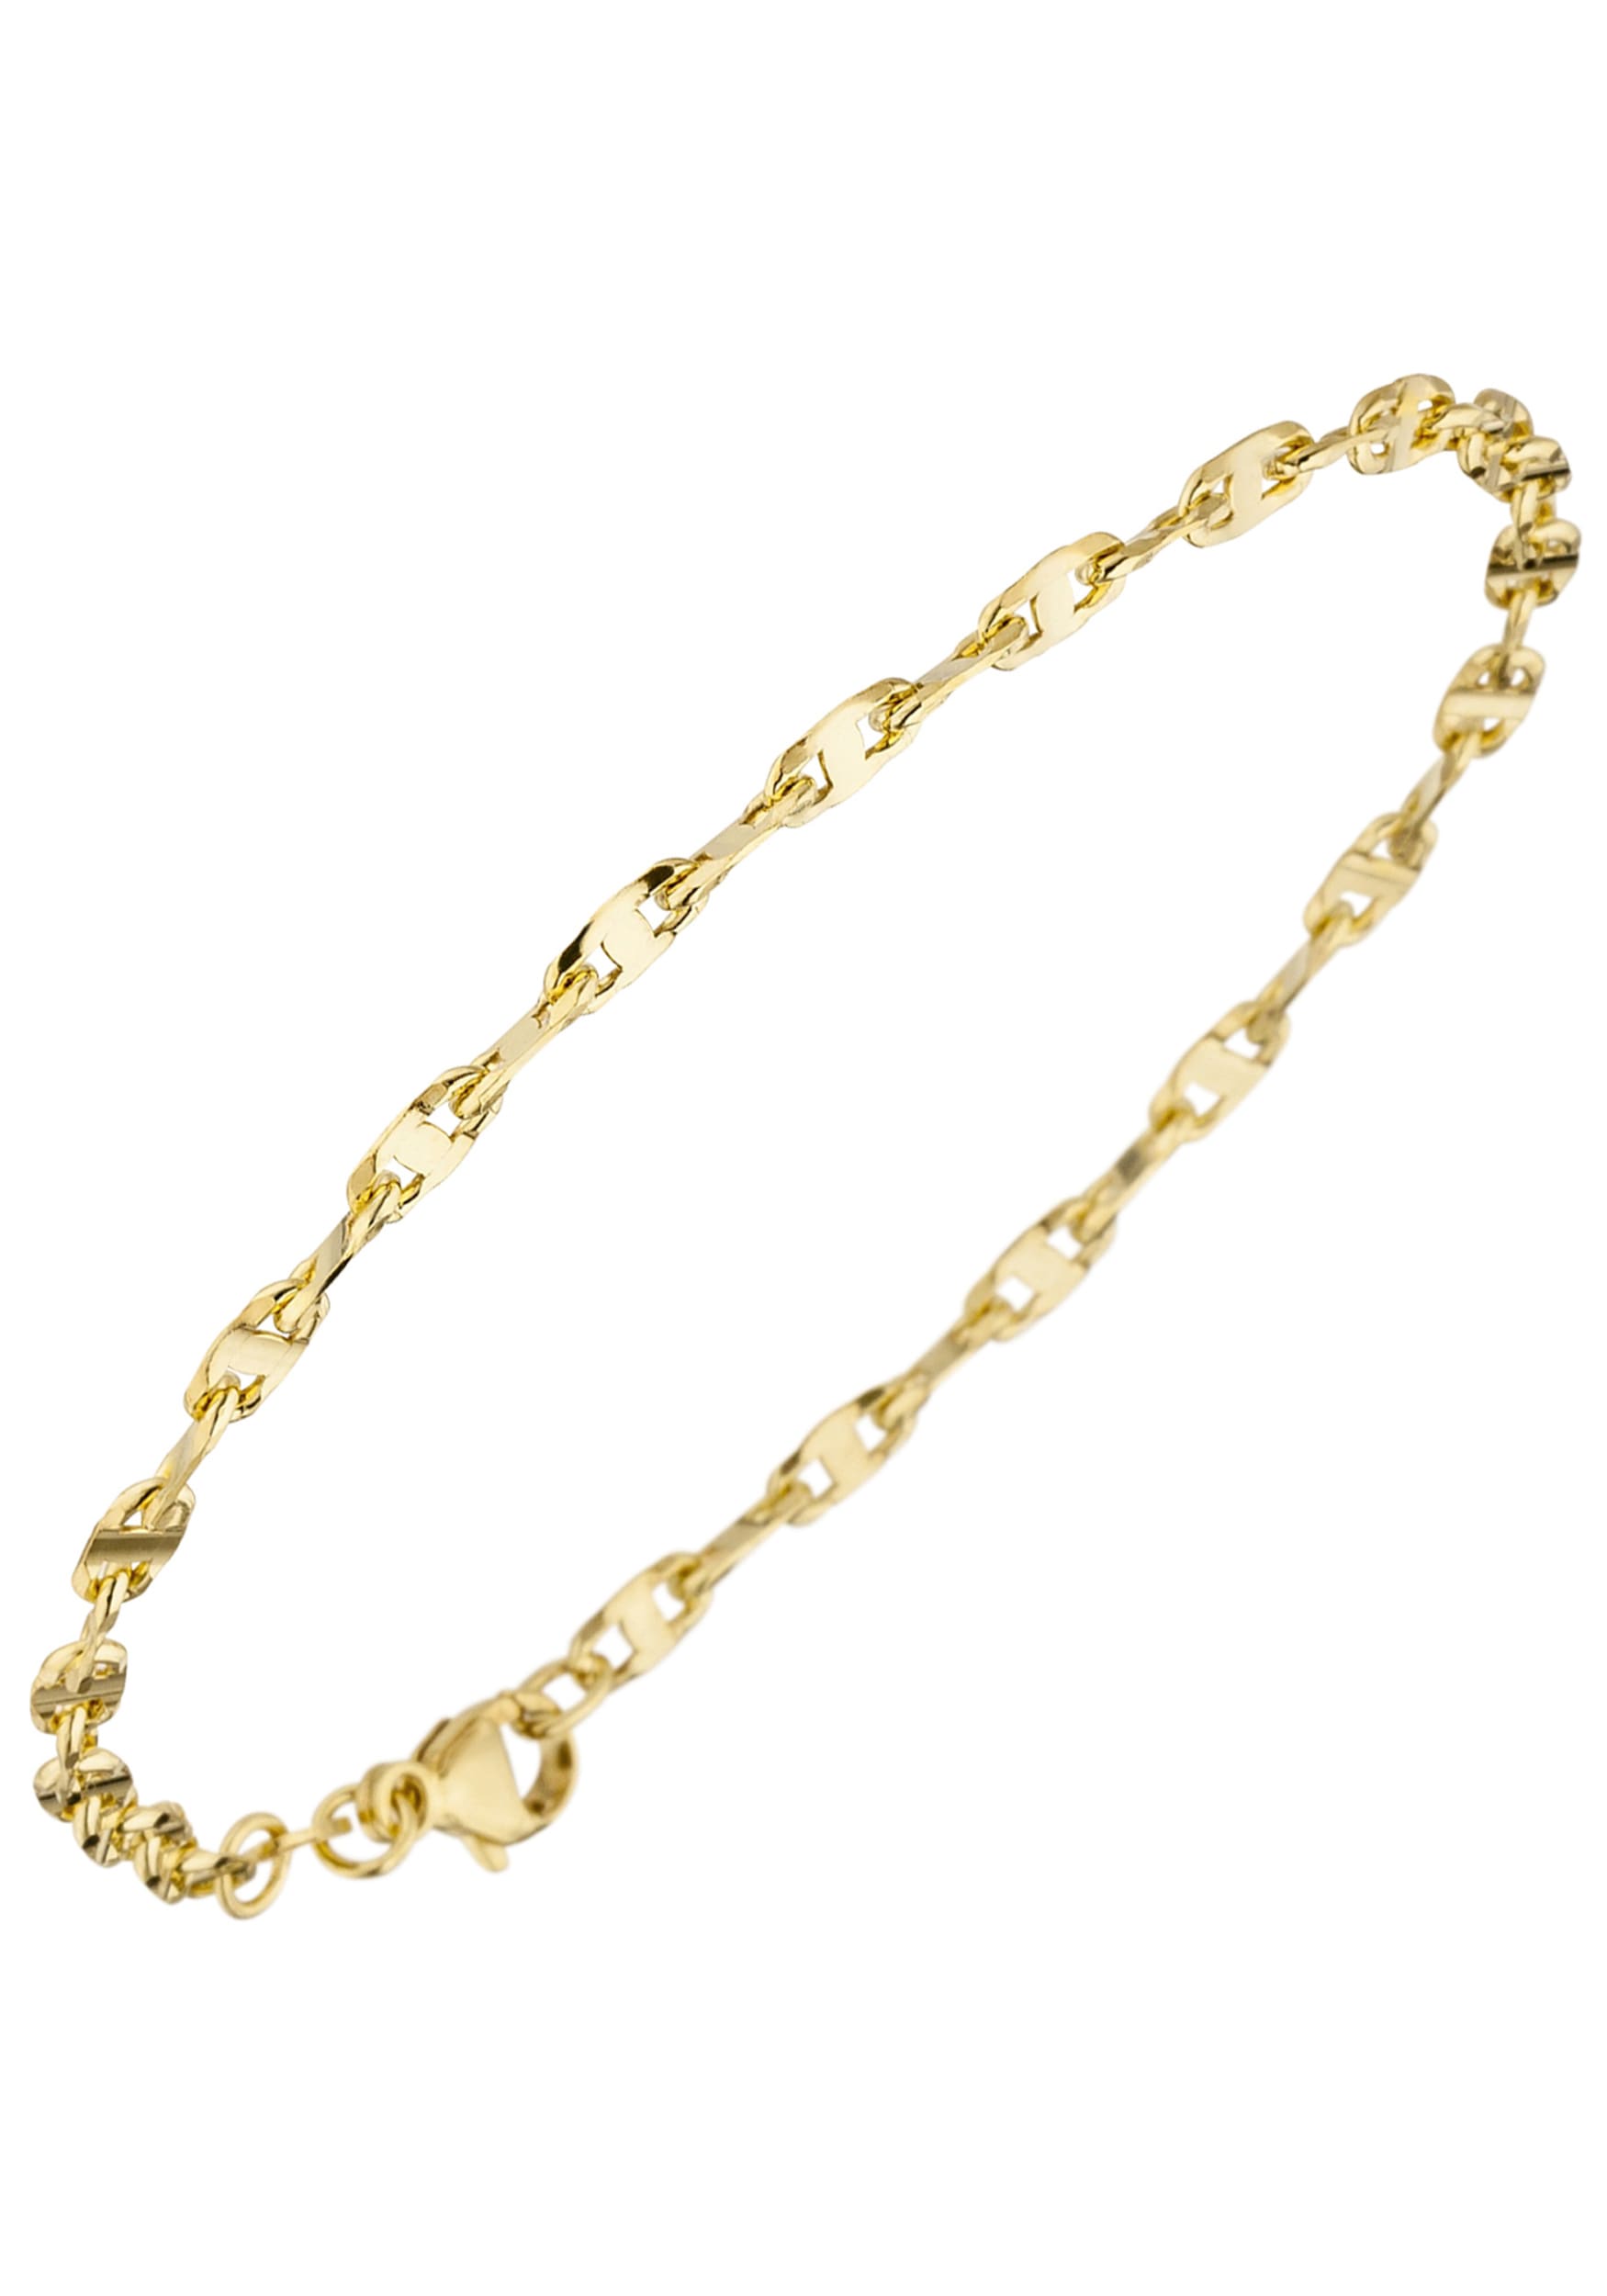 Goldarmband, 585 Gold 19 cm